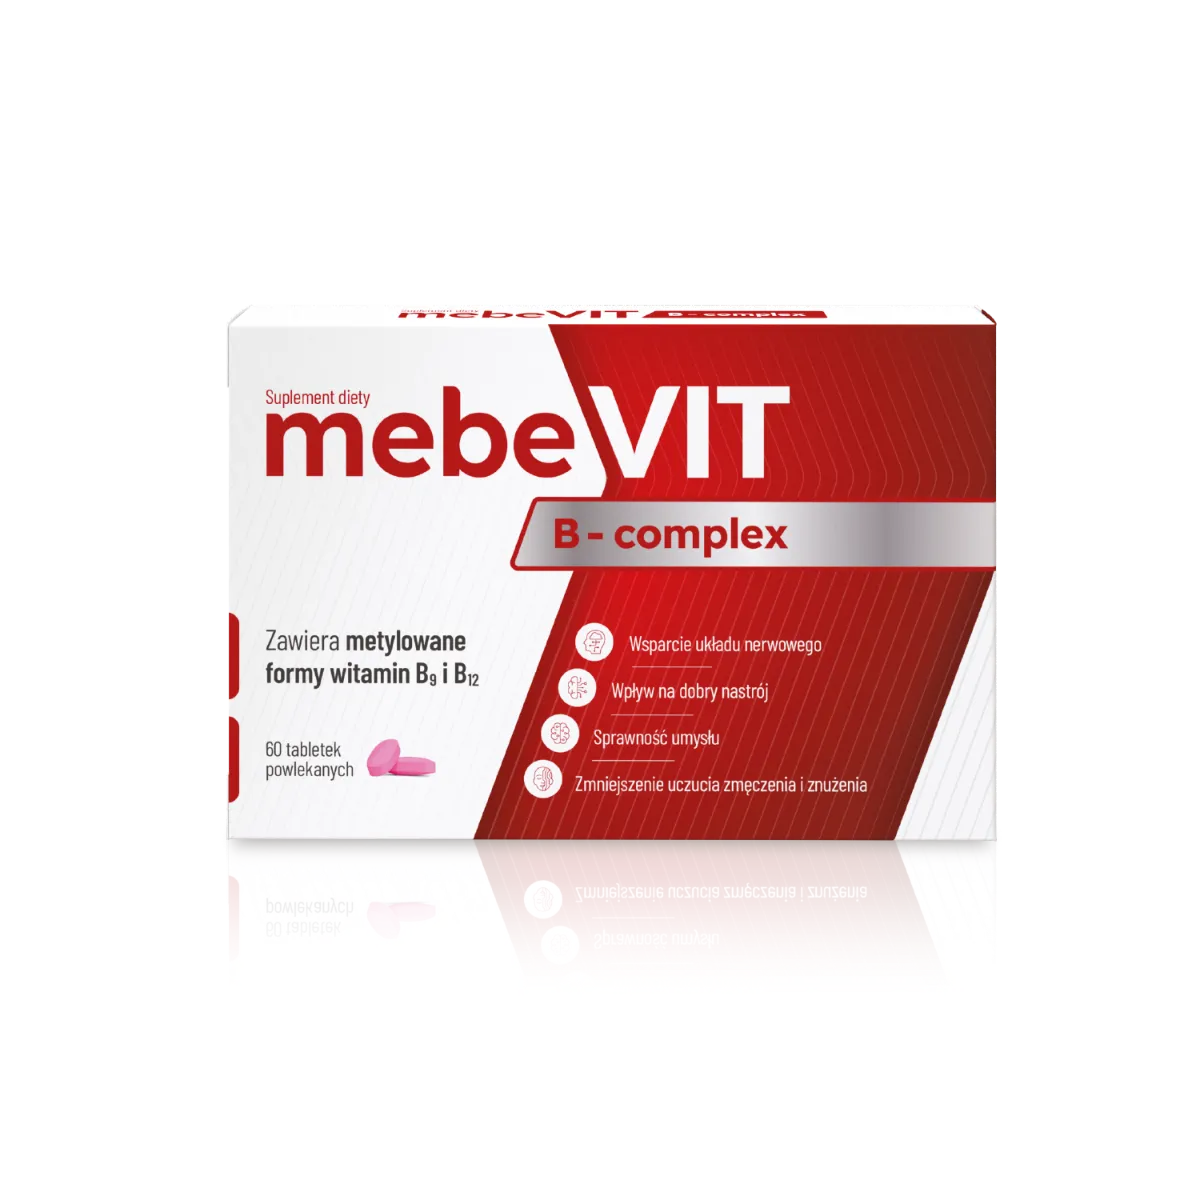 MebeVit B-complex, suplement diety, 60 tabletek powlekanych